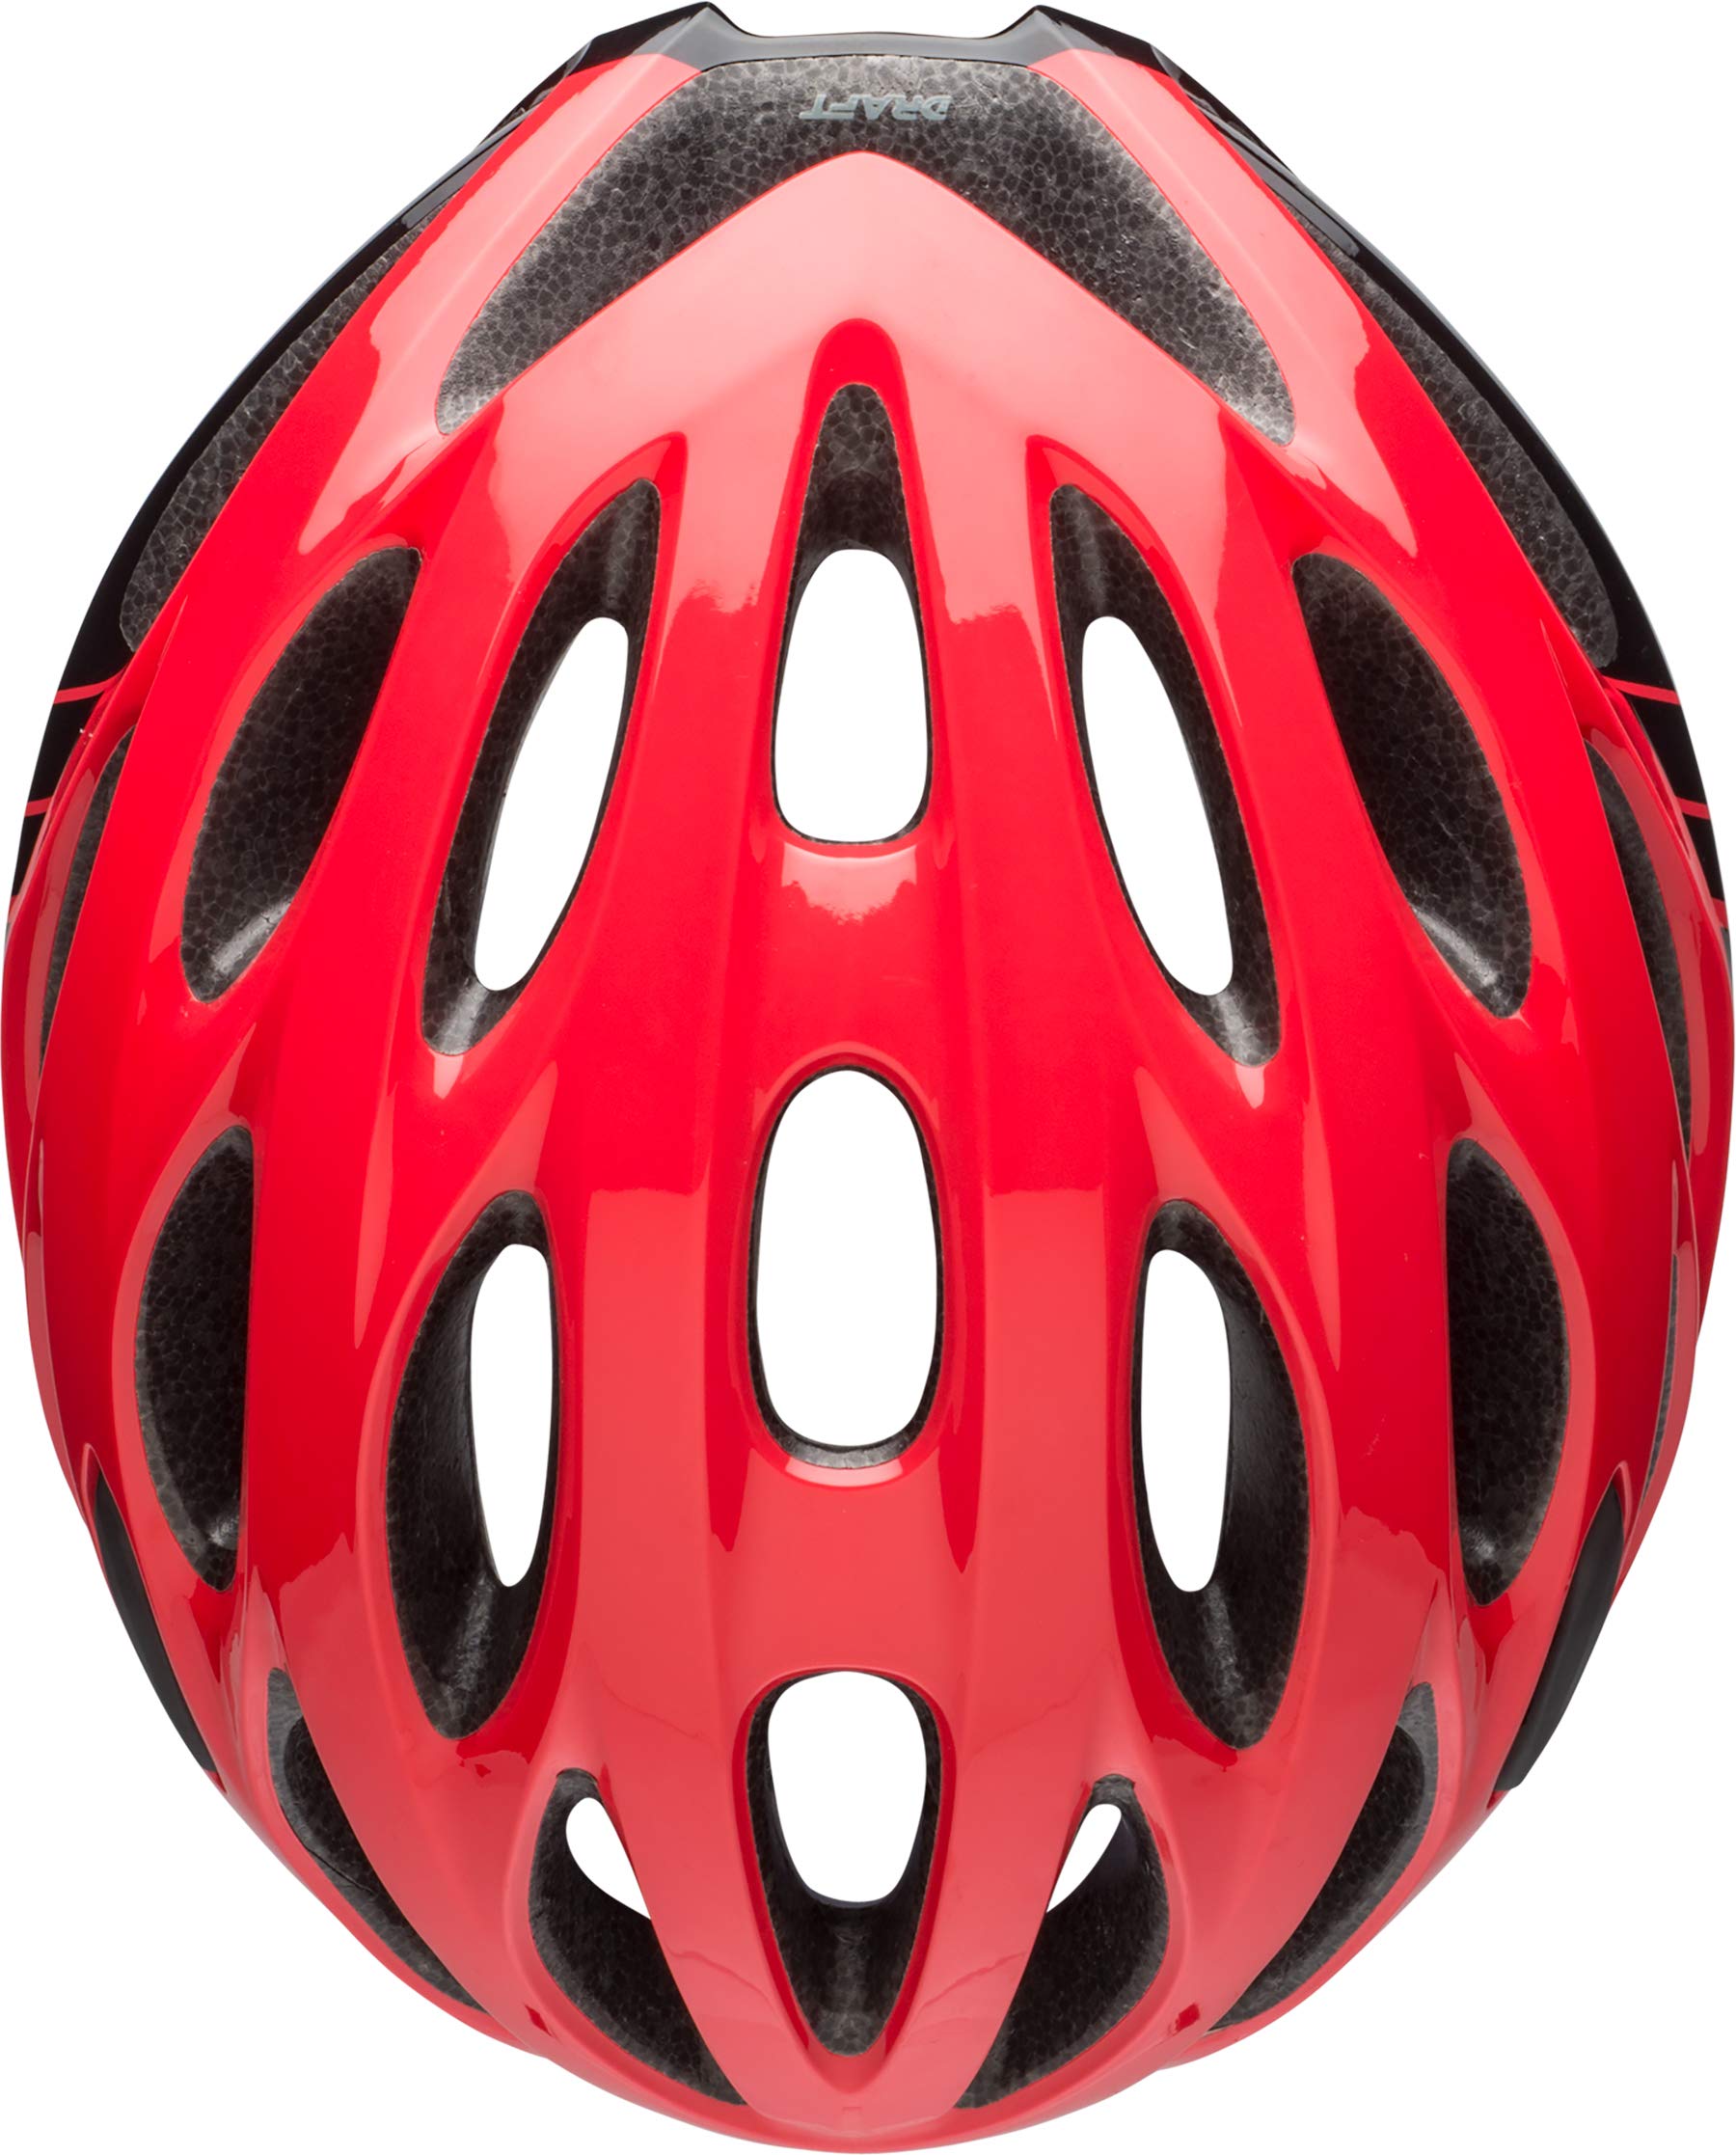 Bell Draft Adult Bike Helmet  - Like New